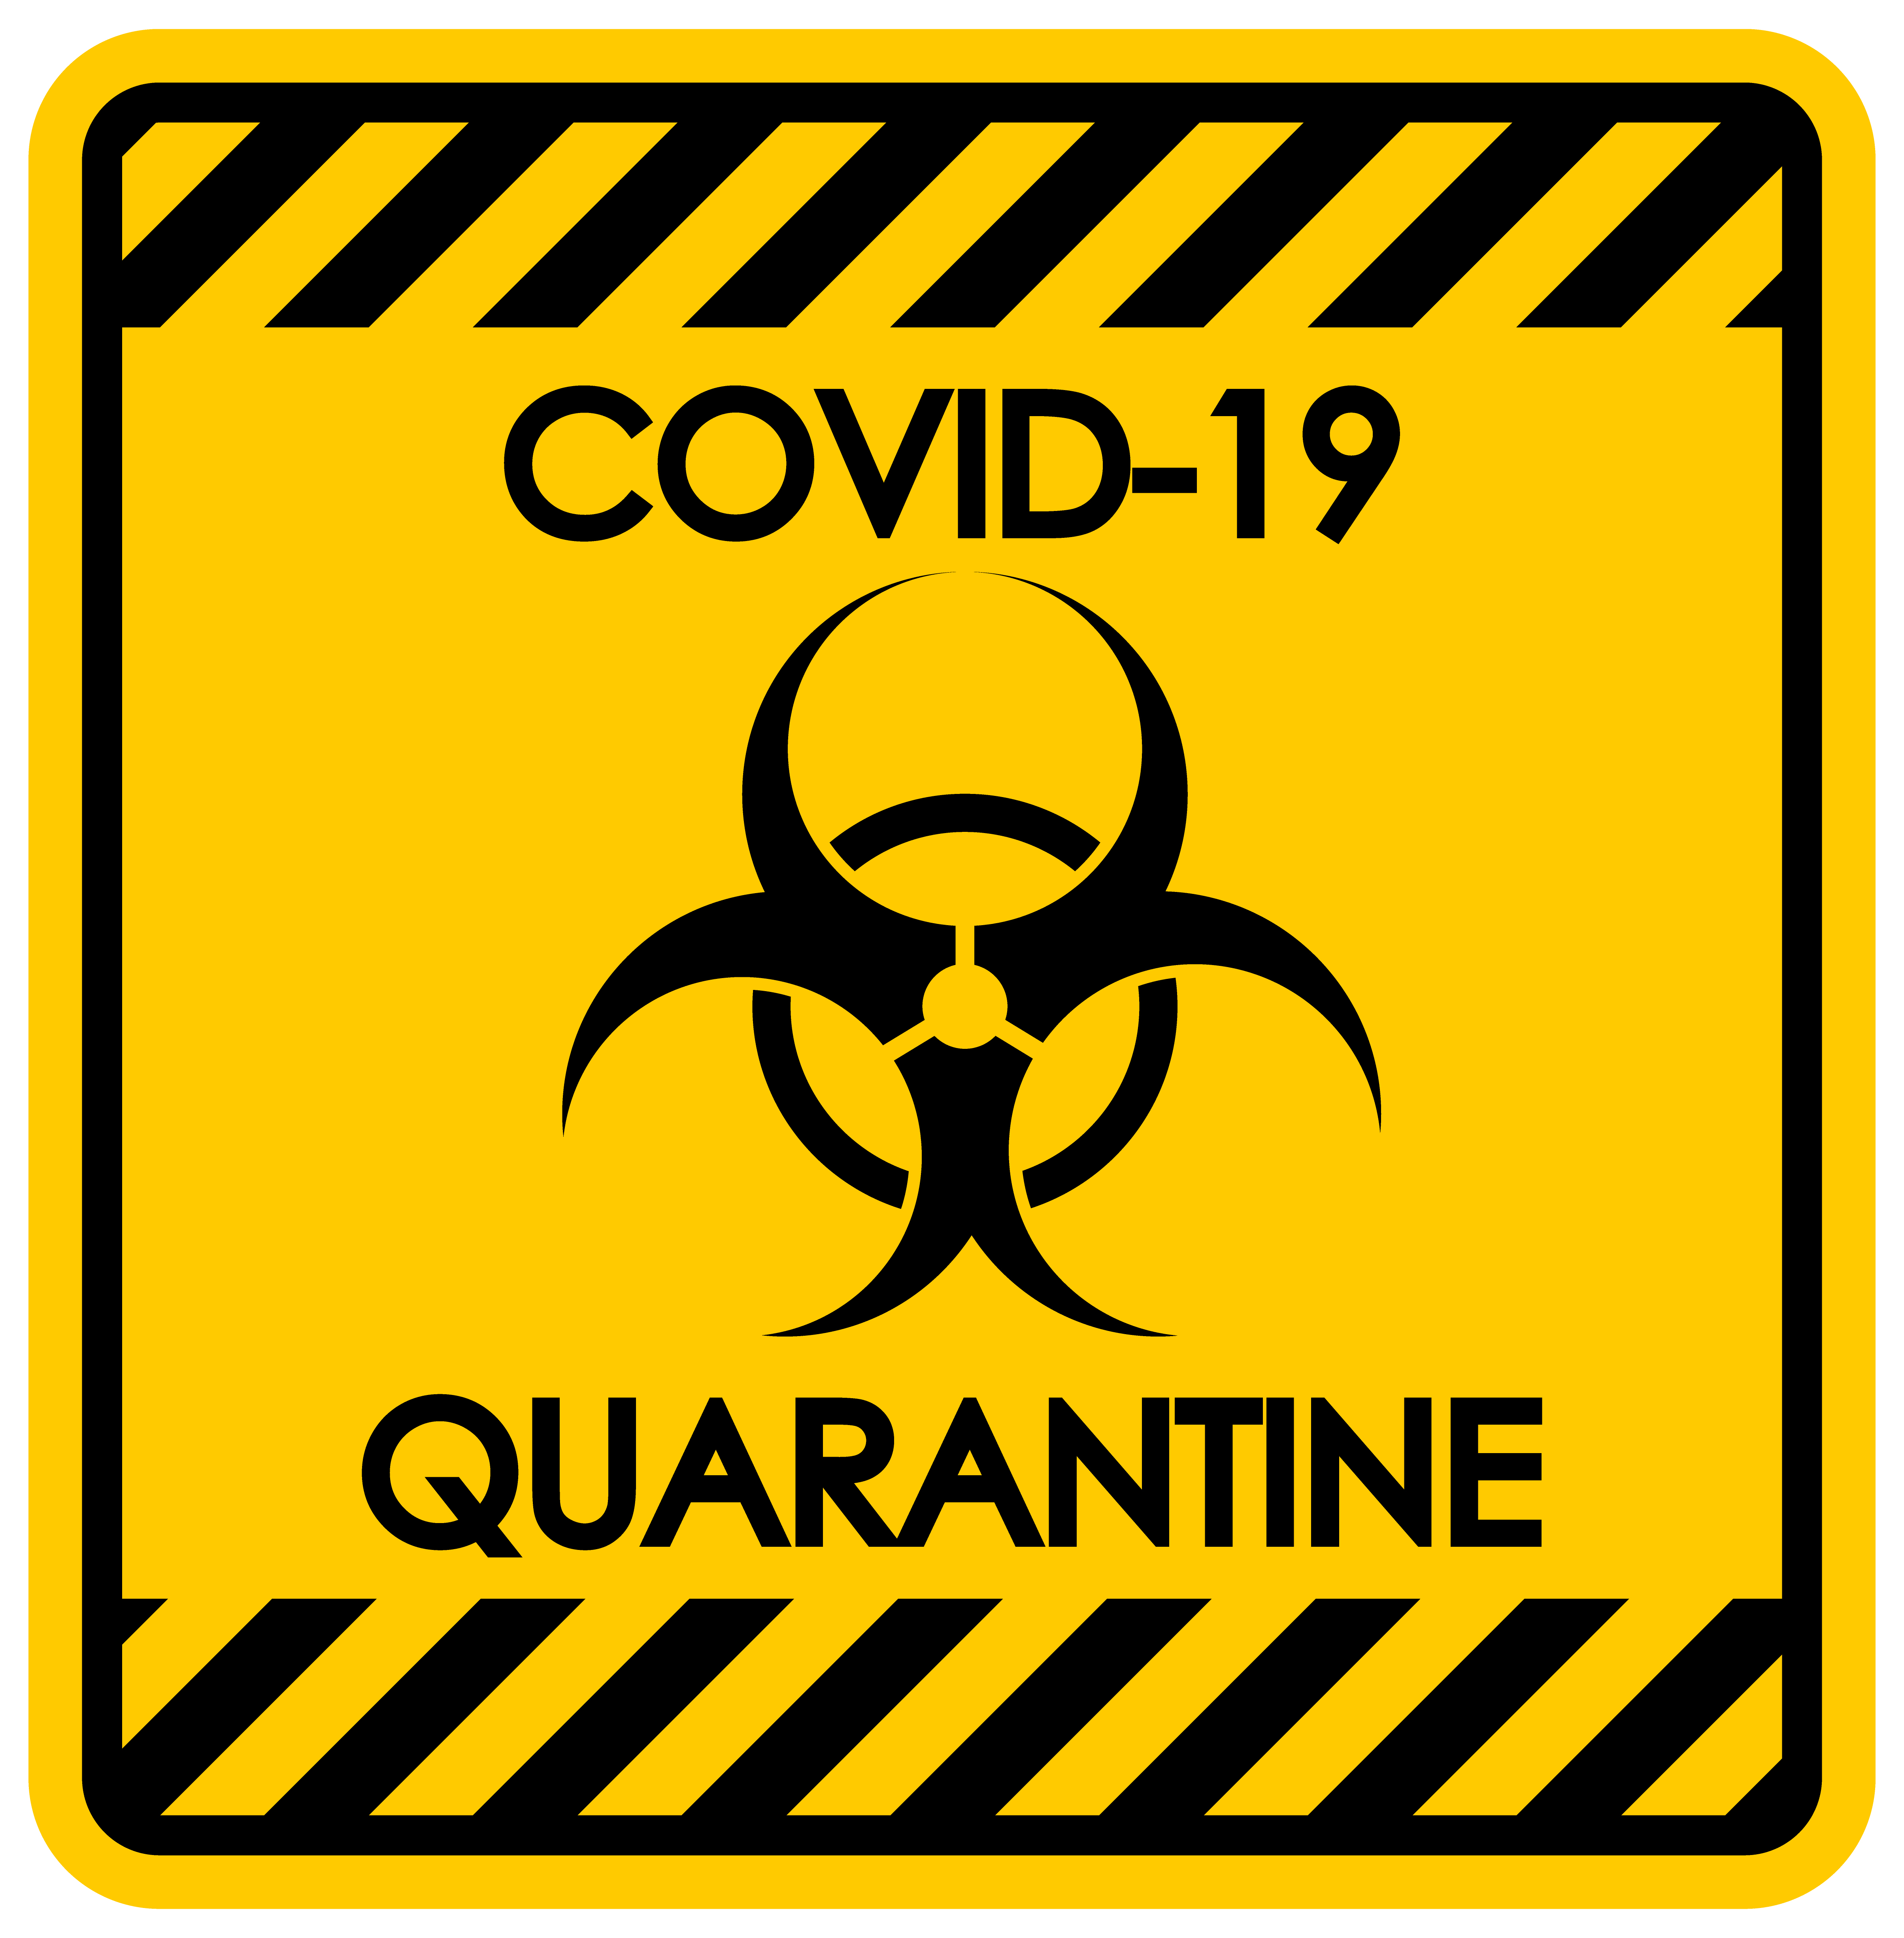 Coronavirus quarantine sign Download Free Vectors, Clipart Graphics